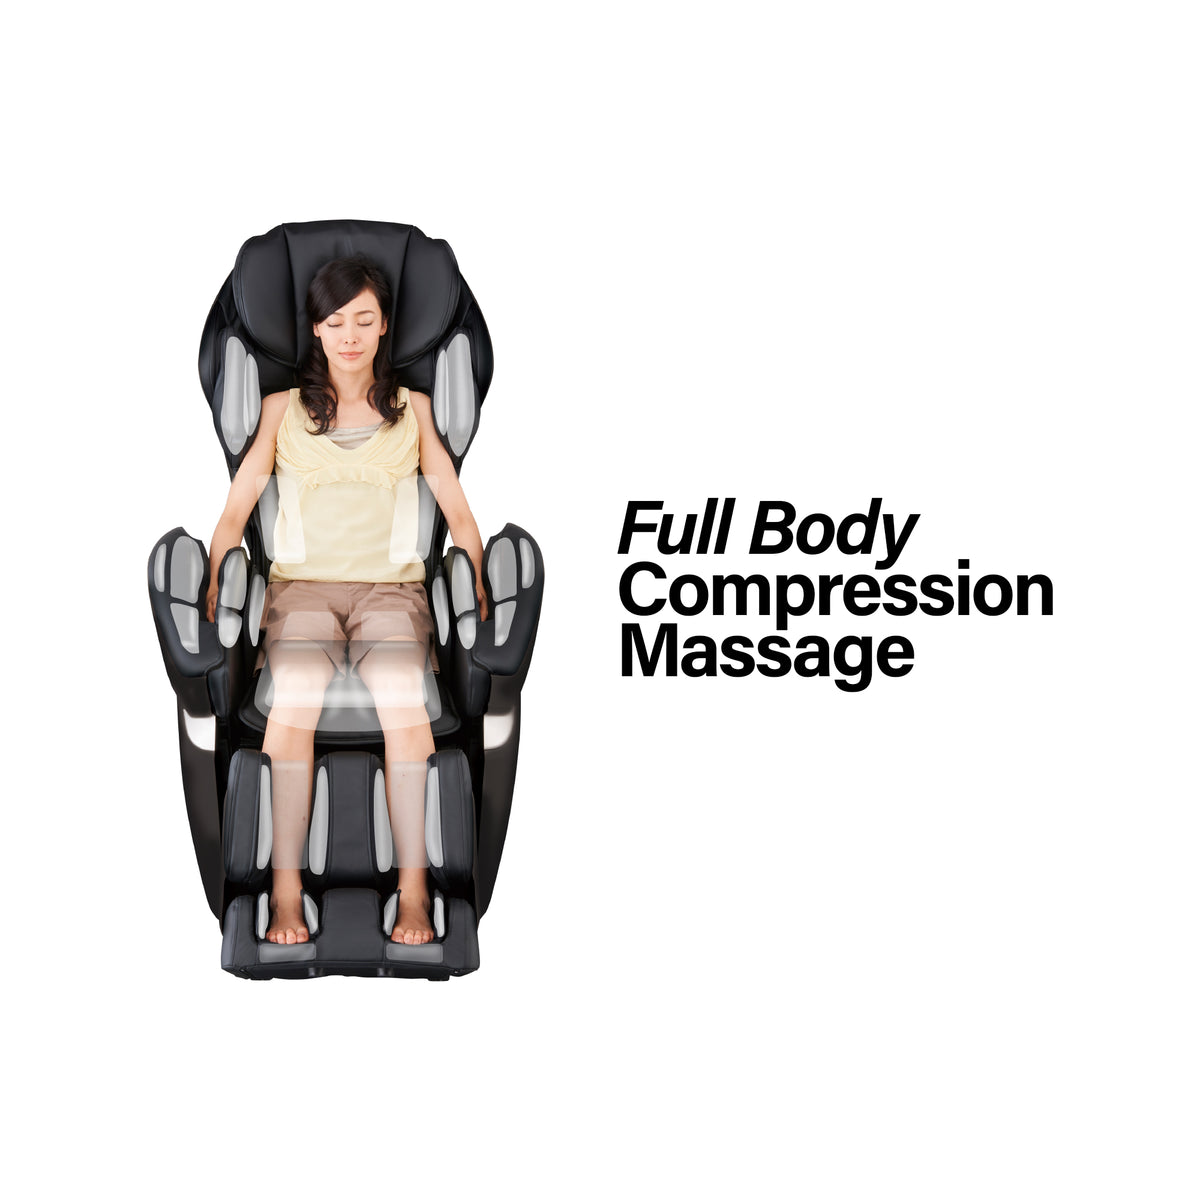 Synca JP1000 4D Ultra Premium Massage Chair